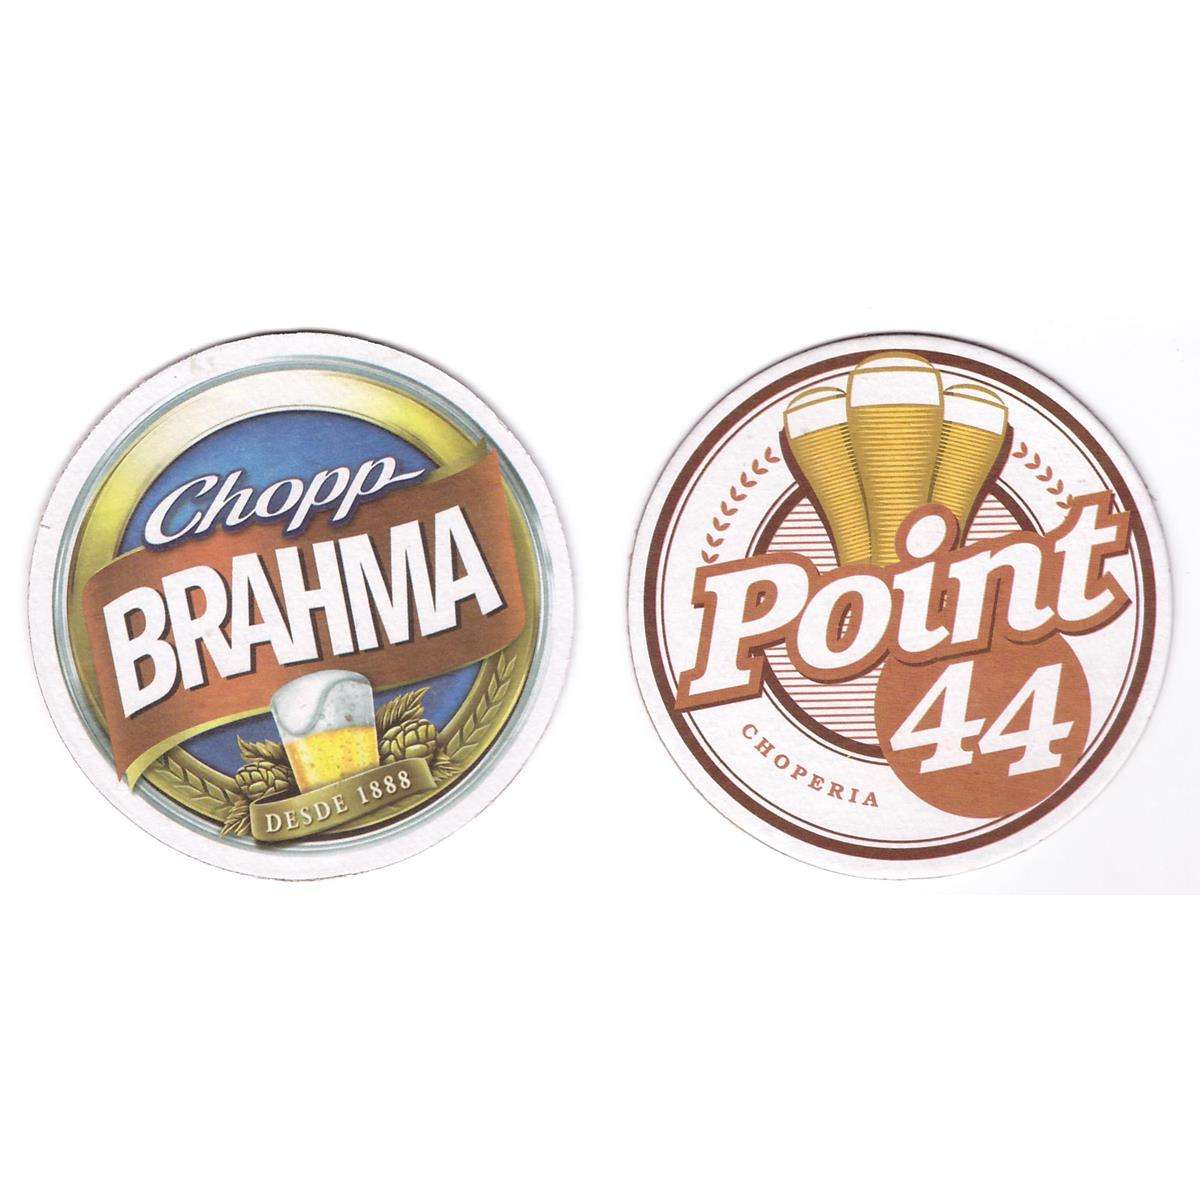 Brahma Point 44